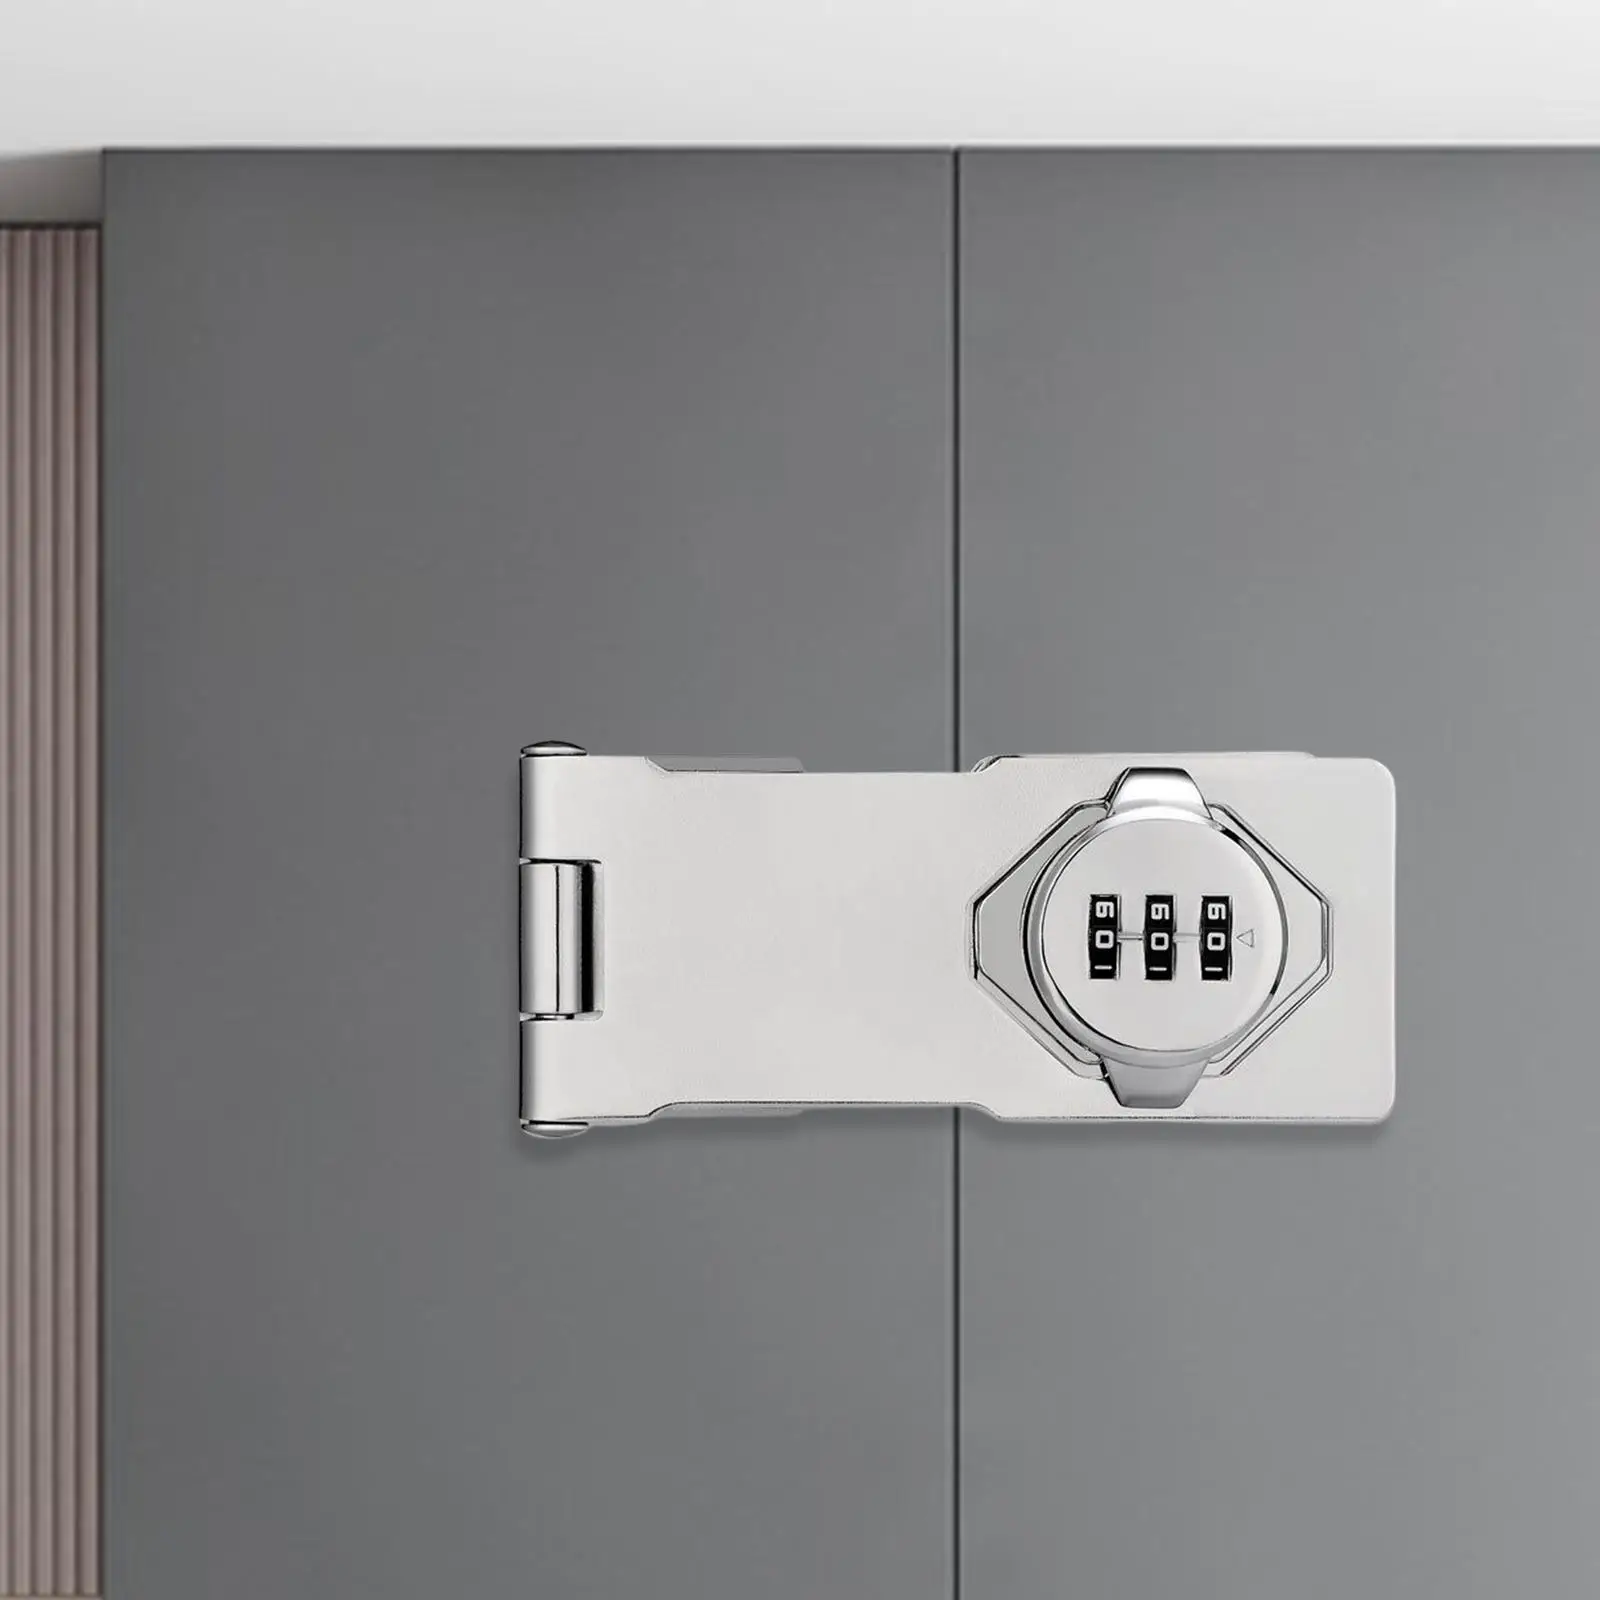 Cabinet Door Lock Household Mechanism Combination Rotary Lock for Mailbox Garage